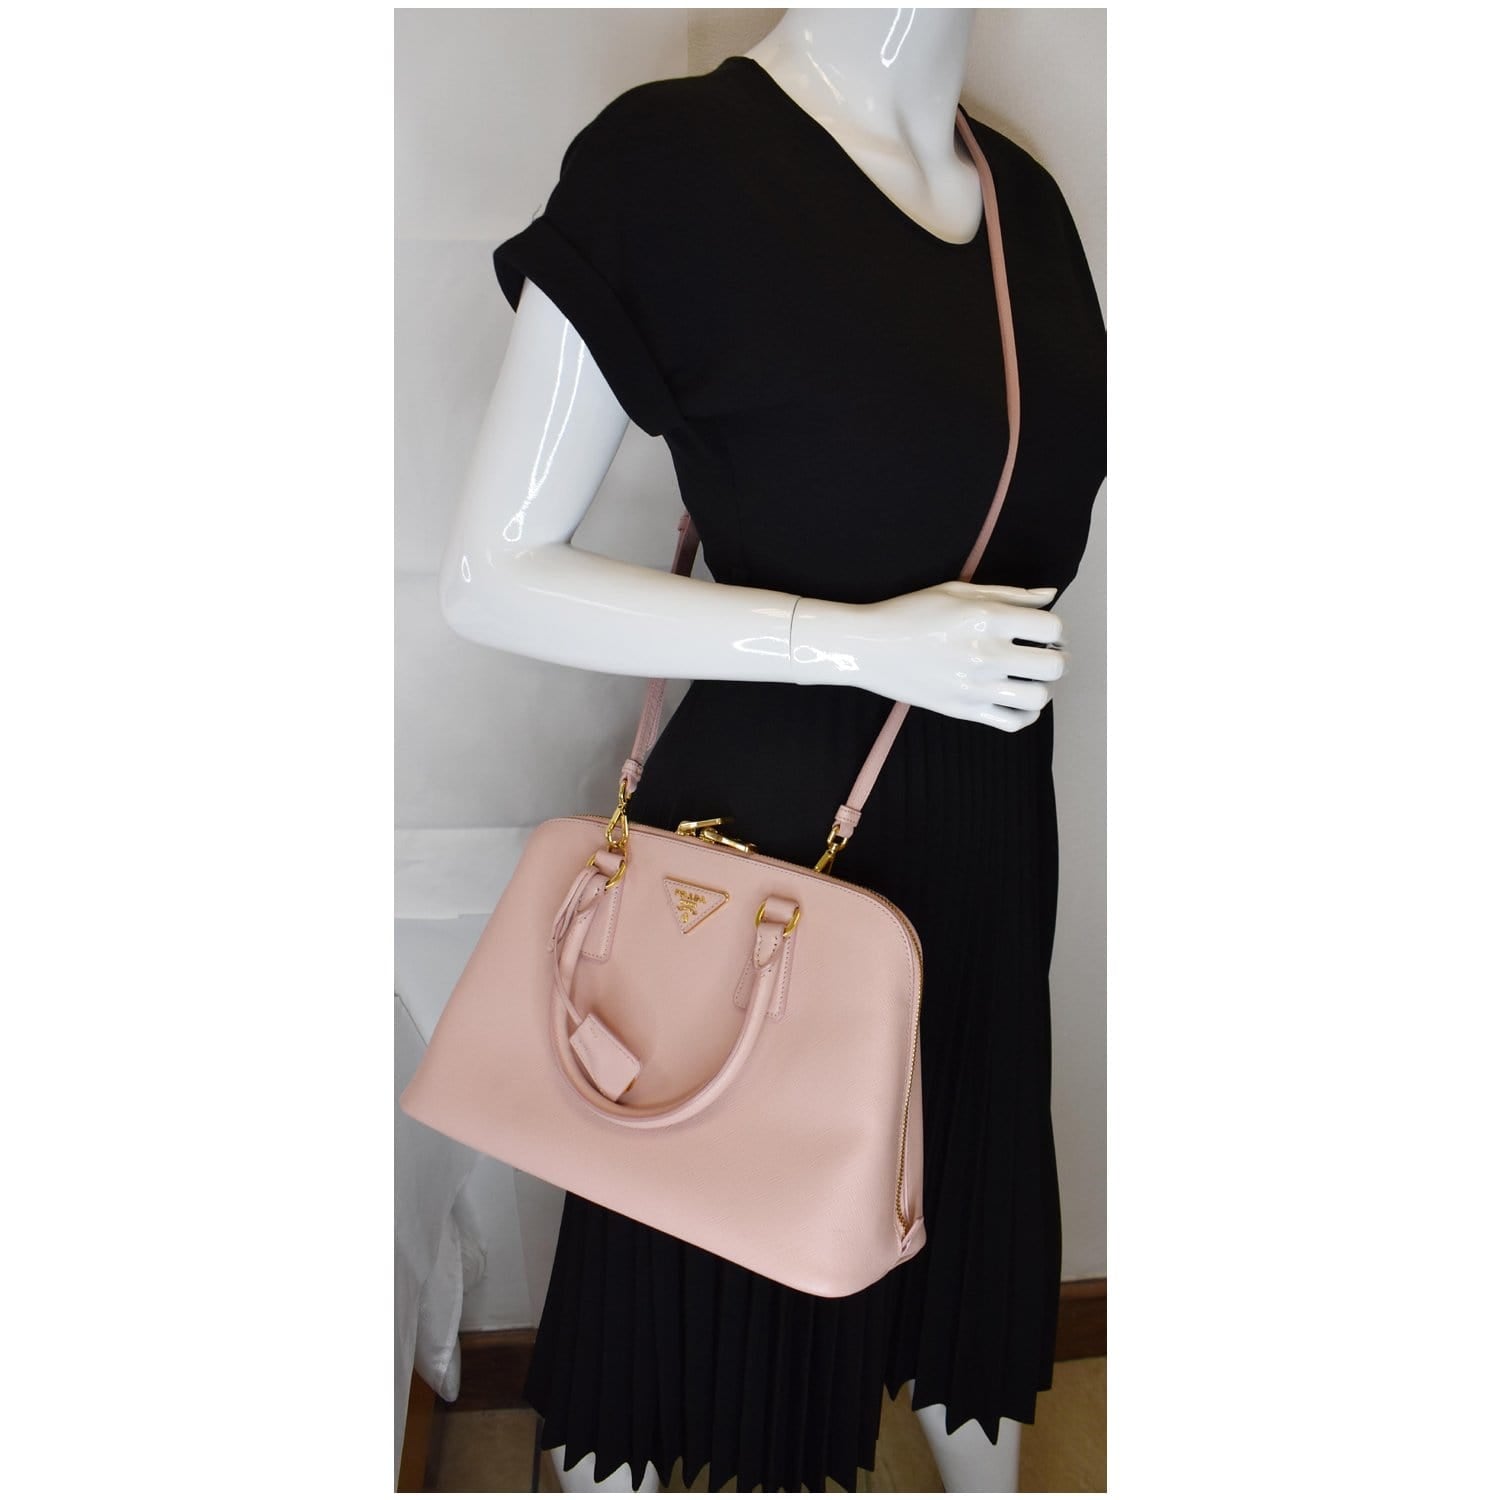 Prada 2010s Saffiano Small Pink Leather Shoulder Bag · INTO